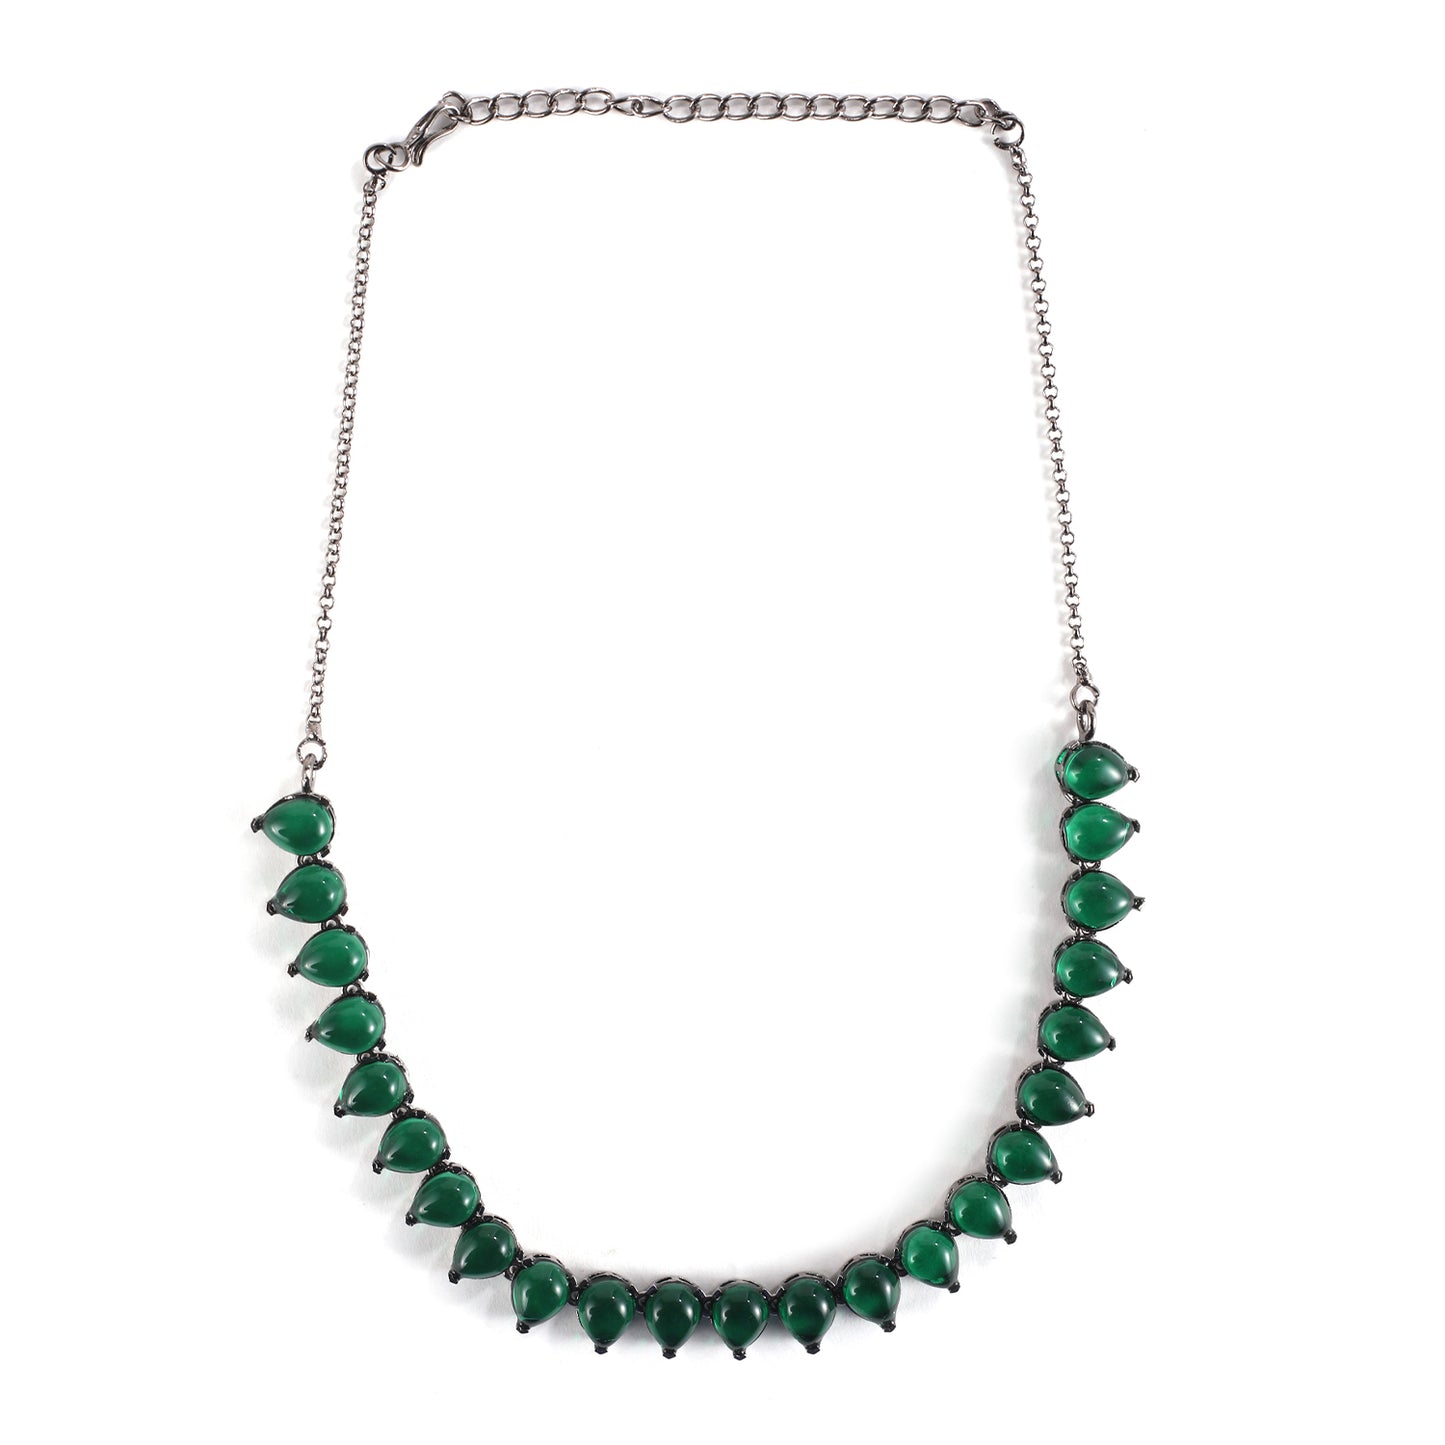 Vintage India Emerald Teardrop Necklace Set